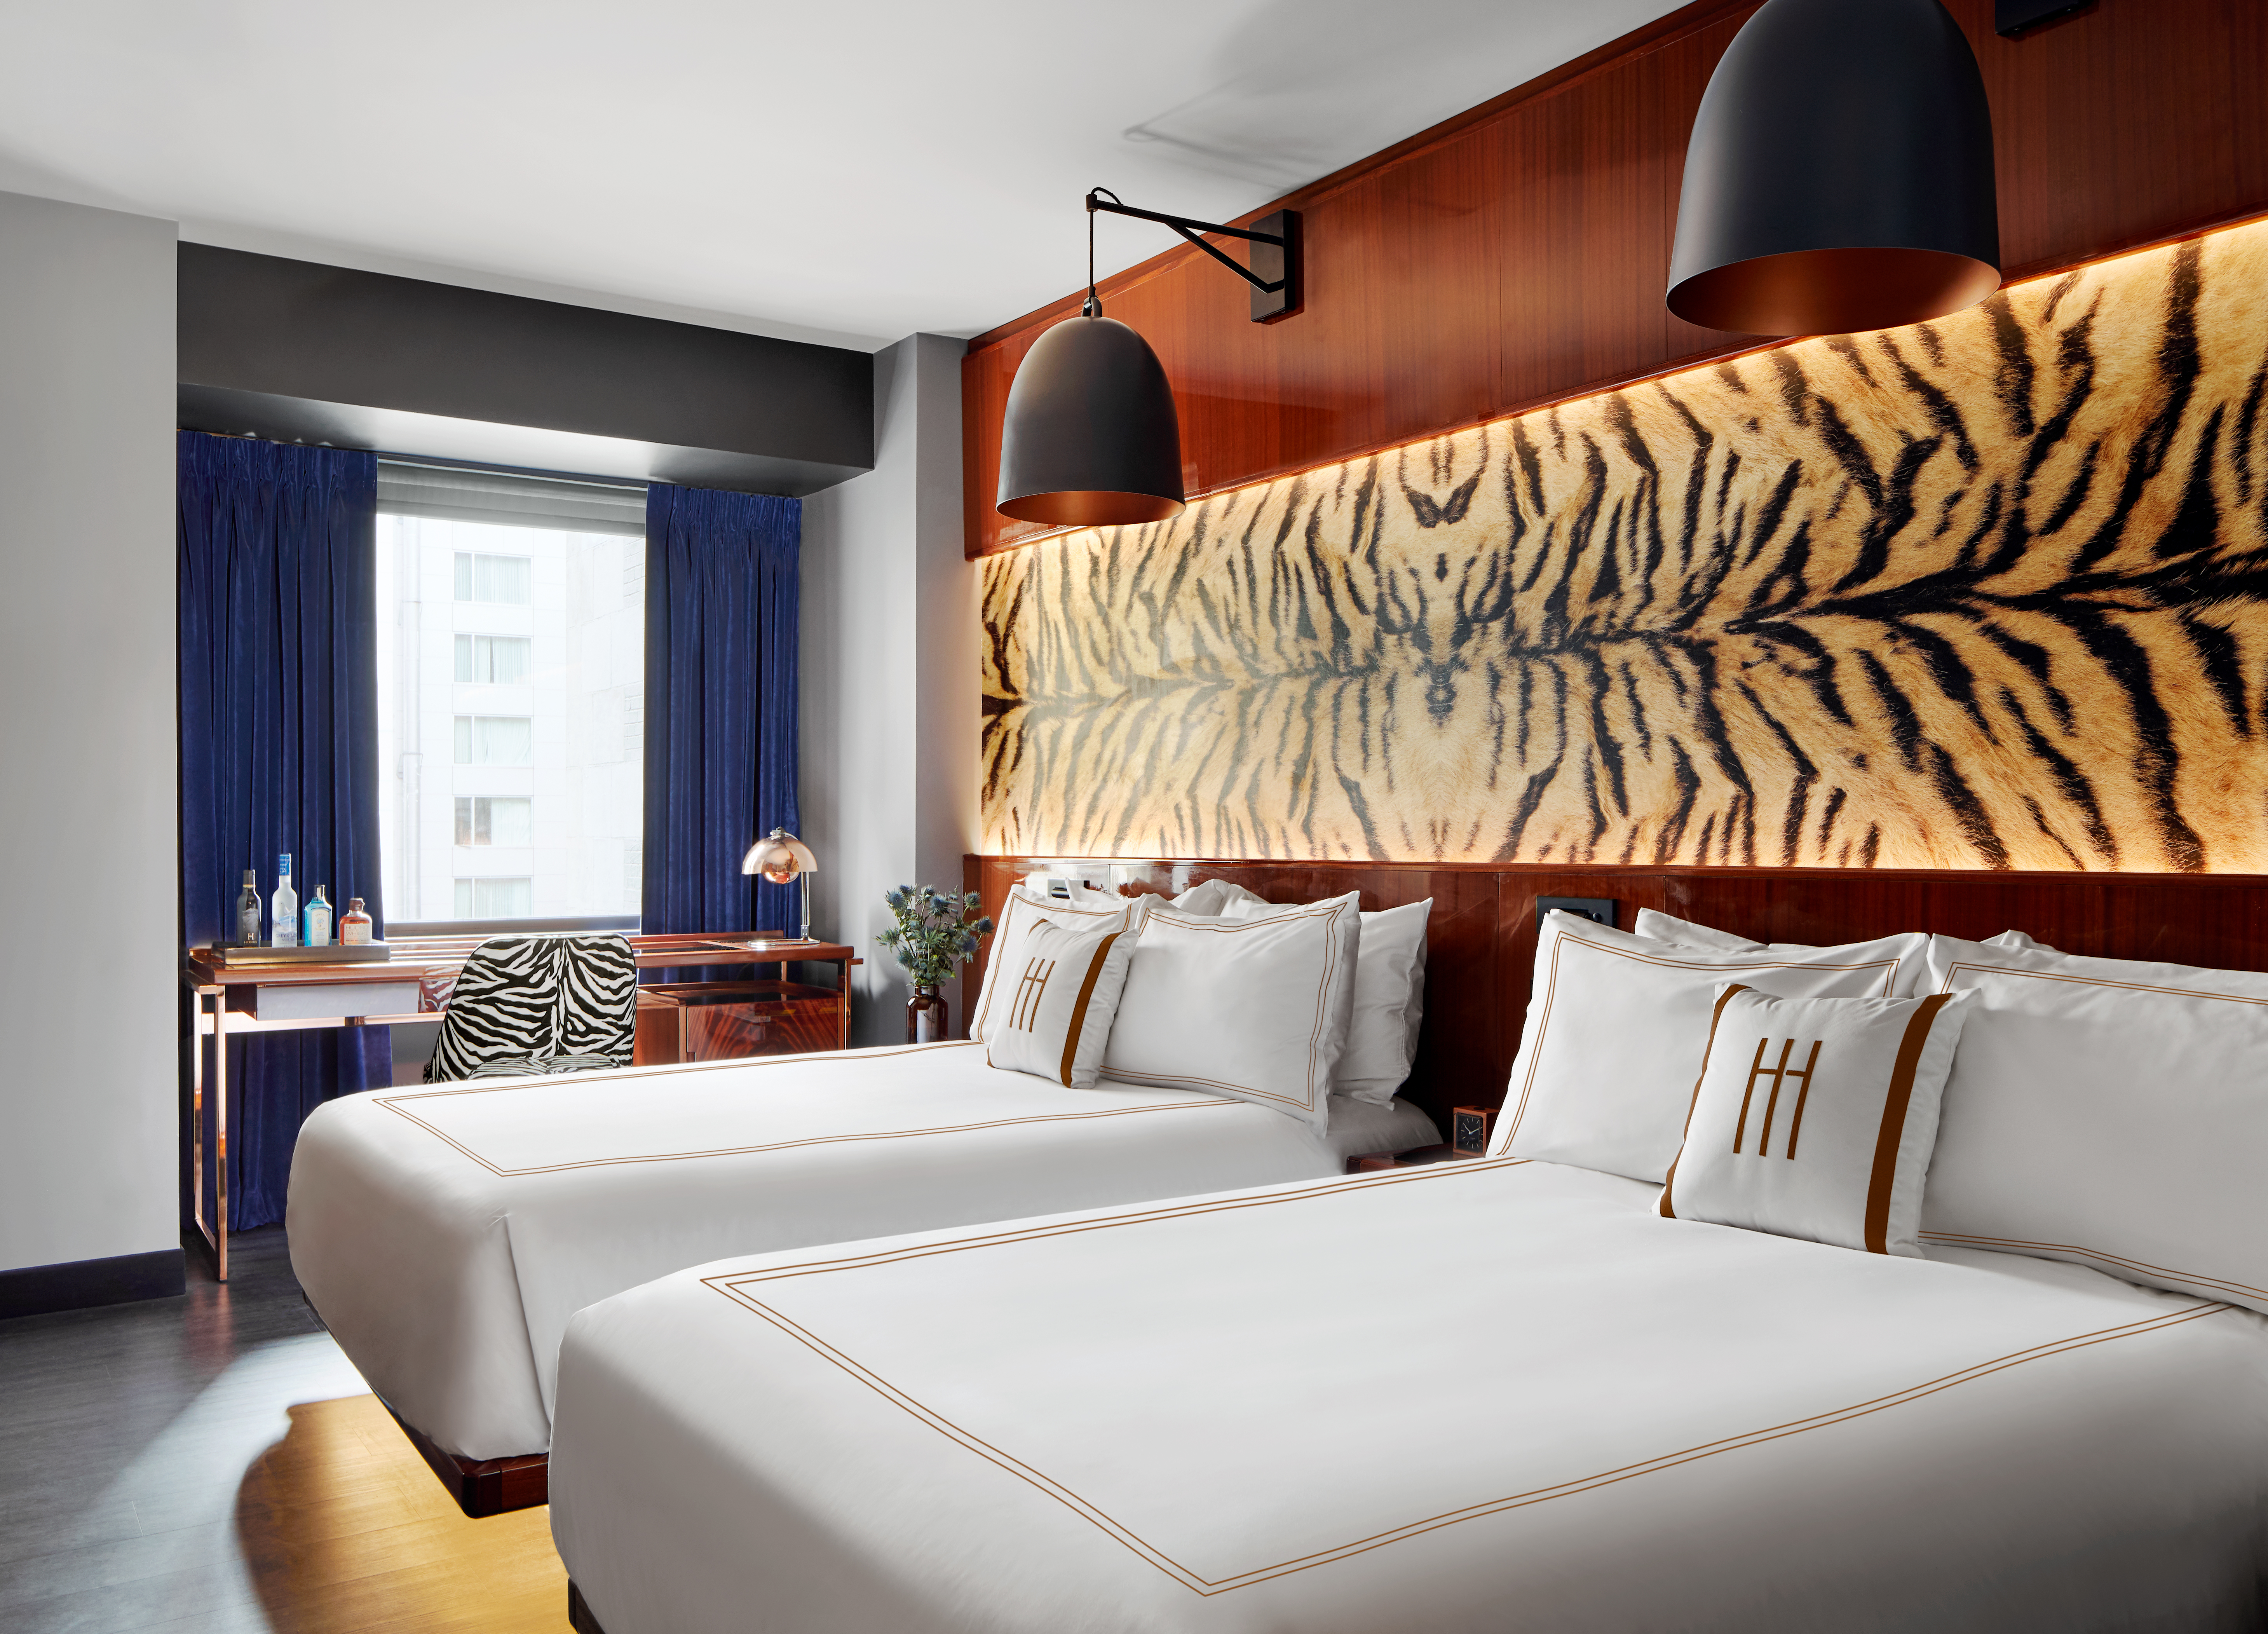 Lodging Hotel Hendricks Features A New York Design